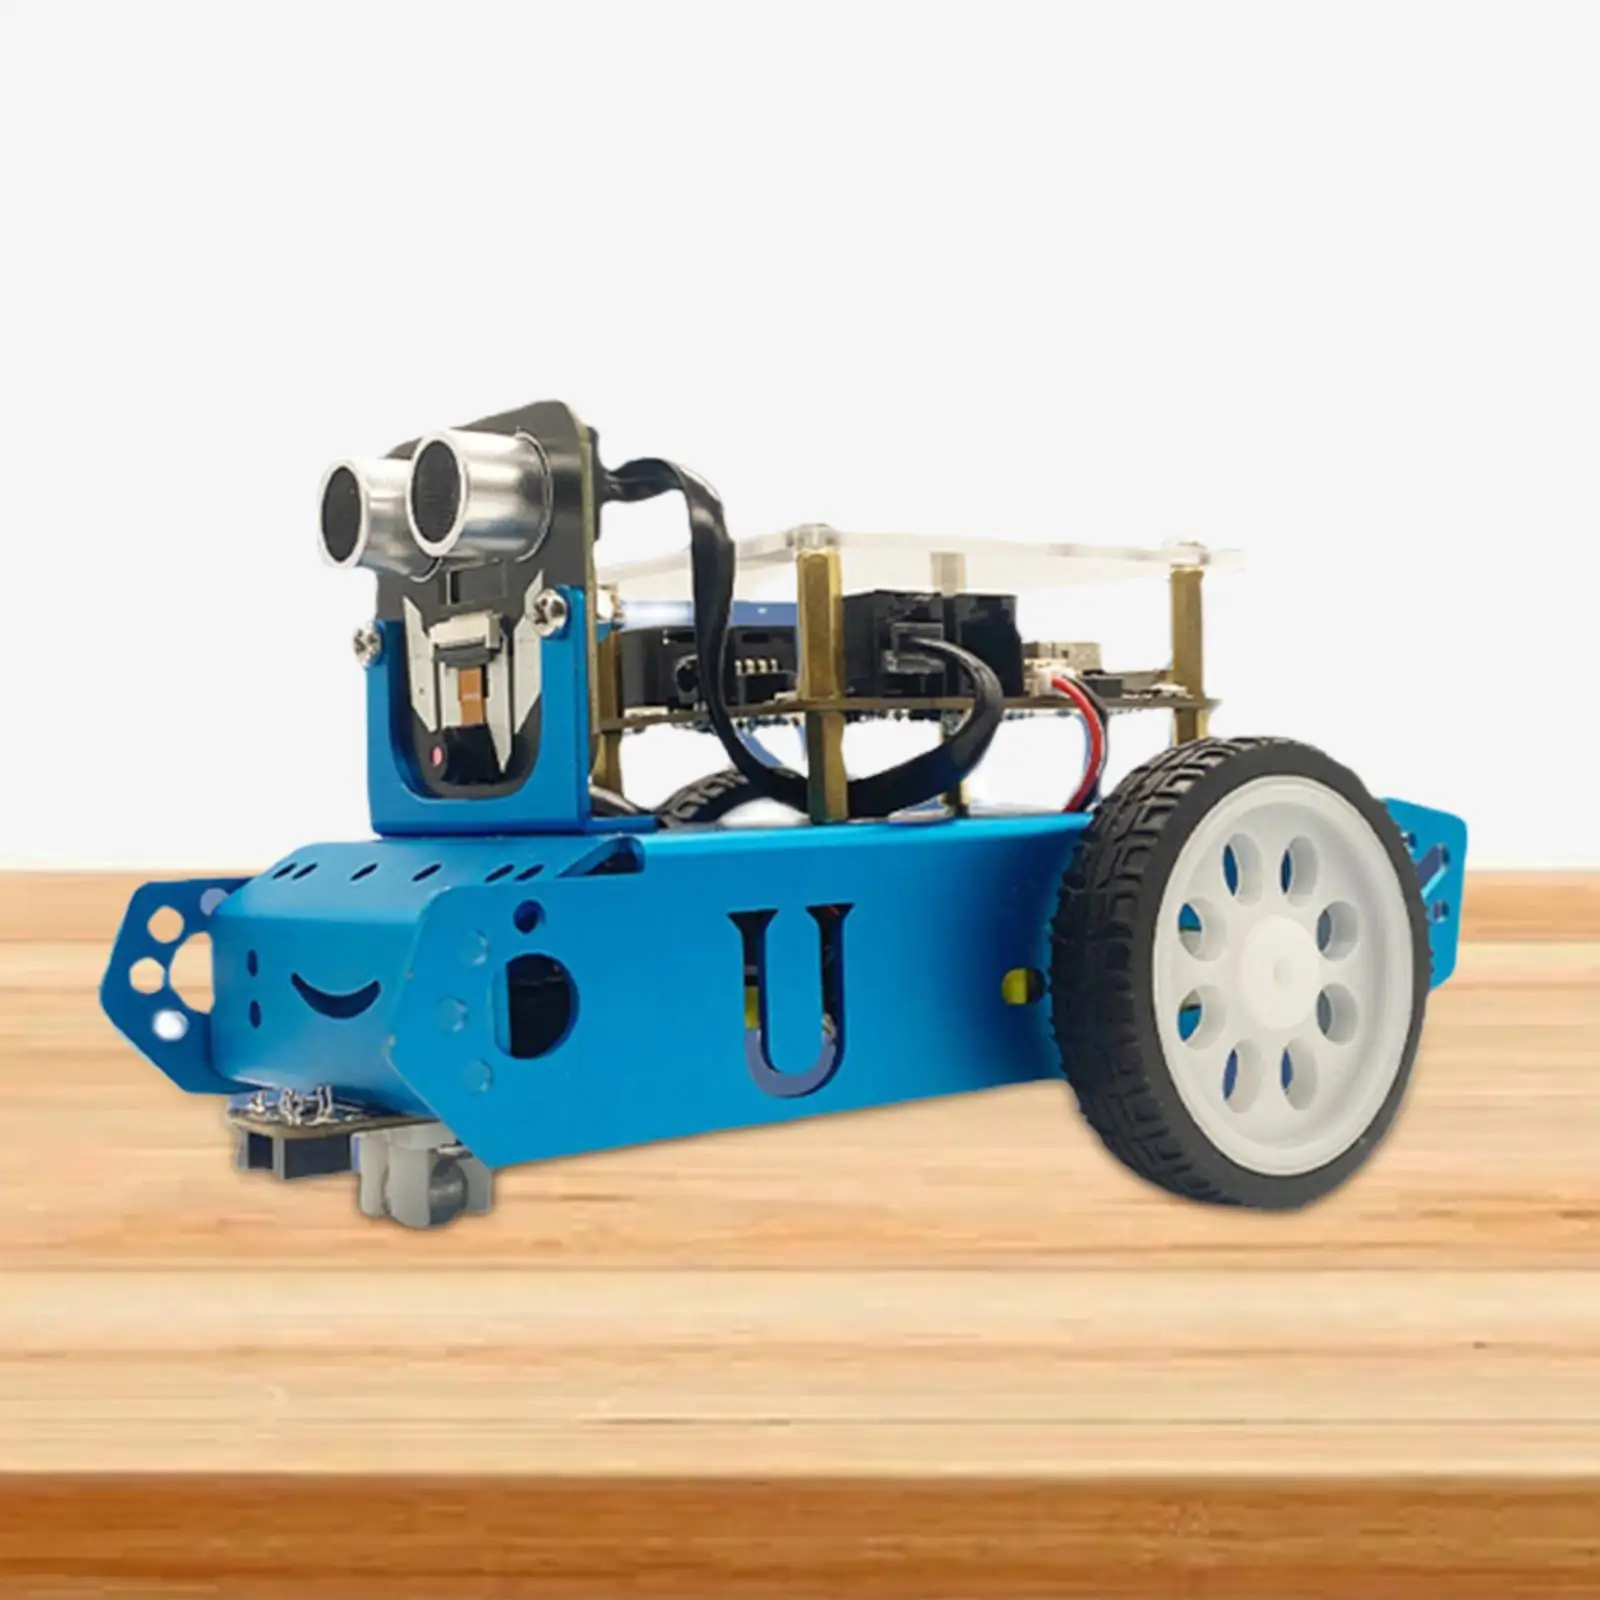 Programming Thrust Robot Self Assembling App Control Compact Robot Car Kits for Electronic Learning Teaching Aids Mathematics